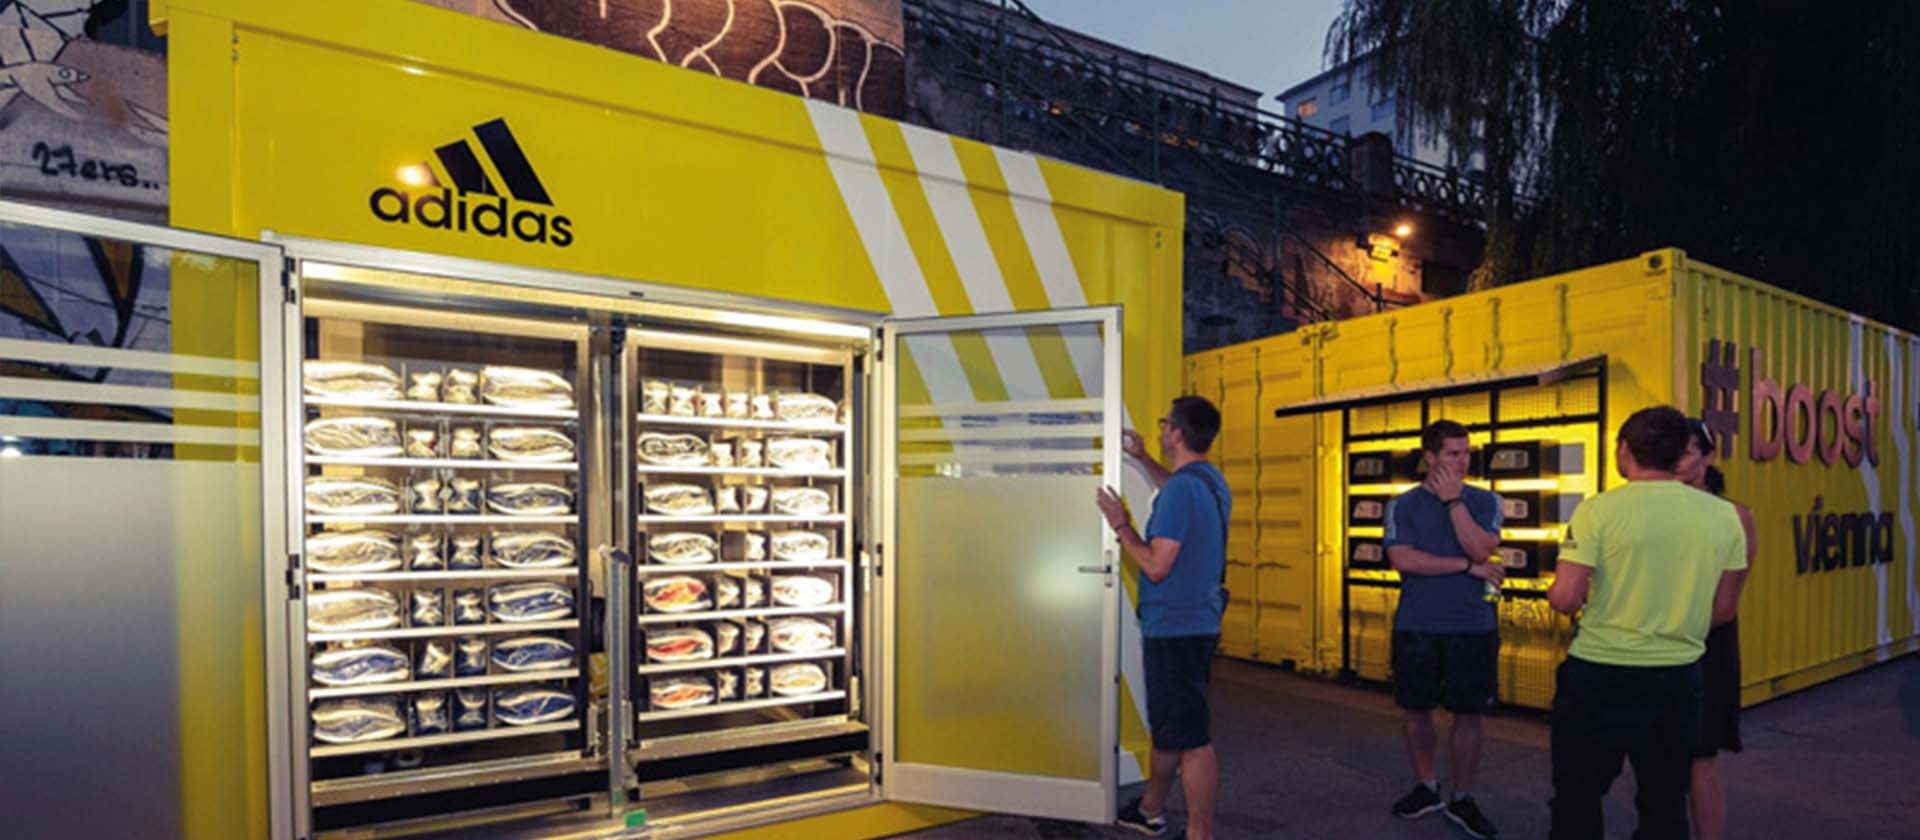 yellow shoe vending machine